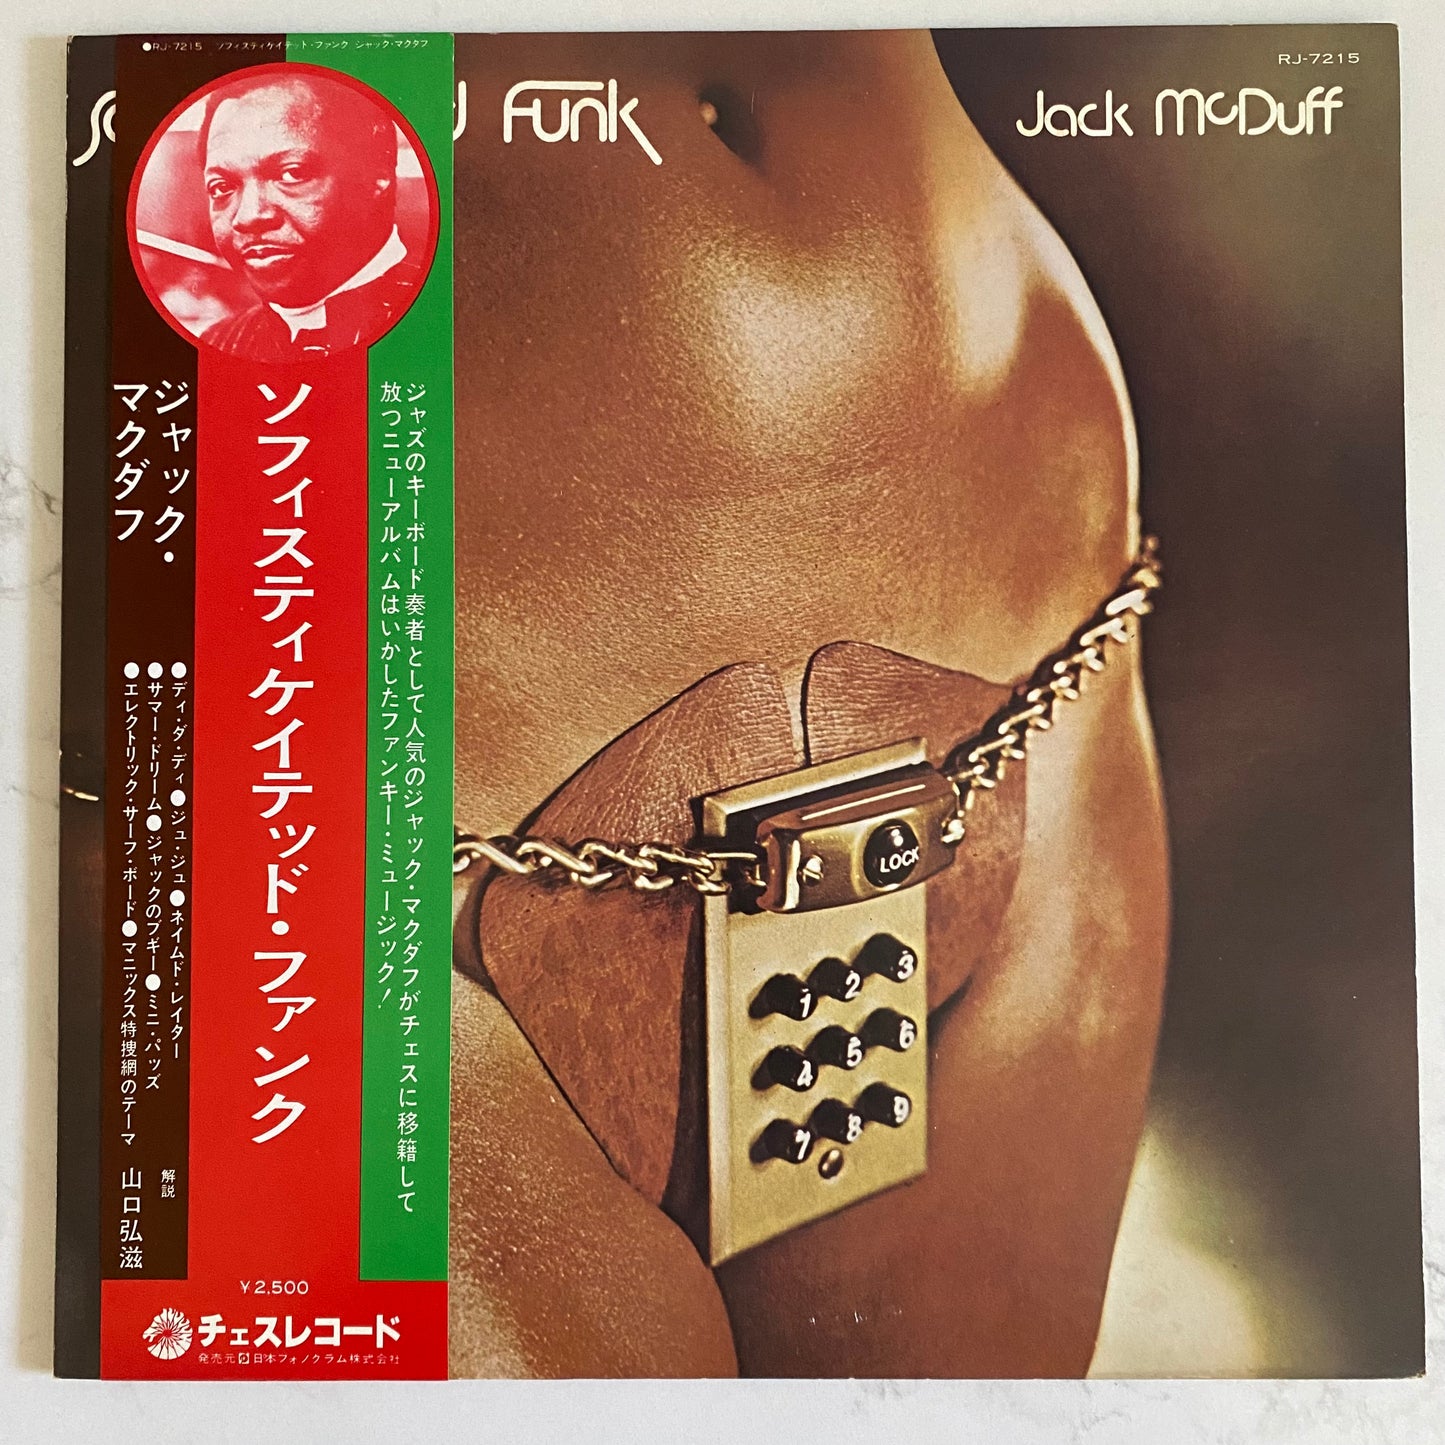 Jack McDuff* - Sophisticated Funk (LP, Album). Funk